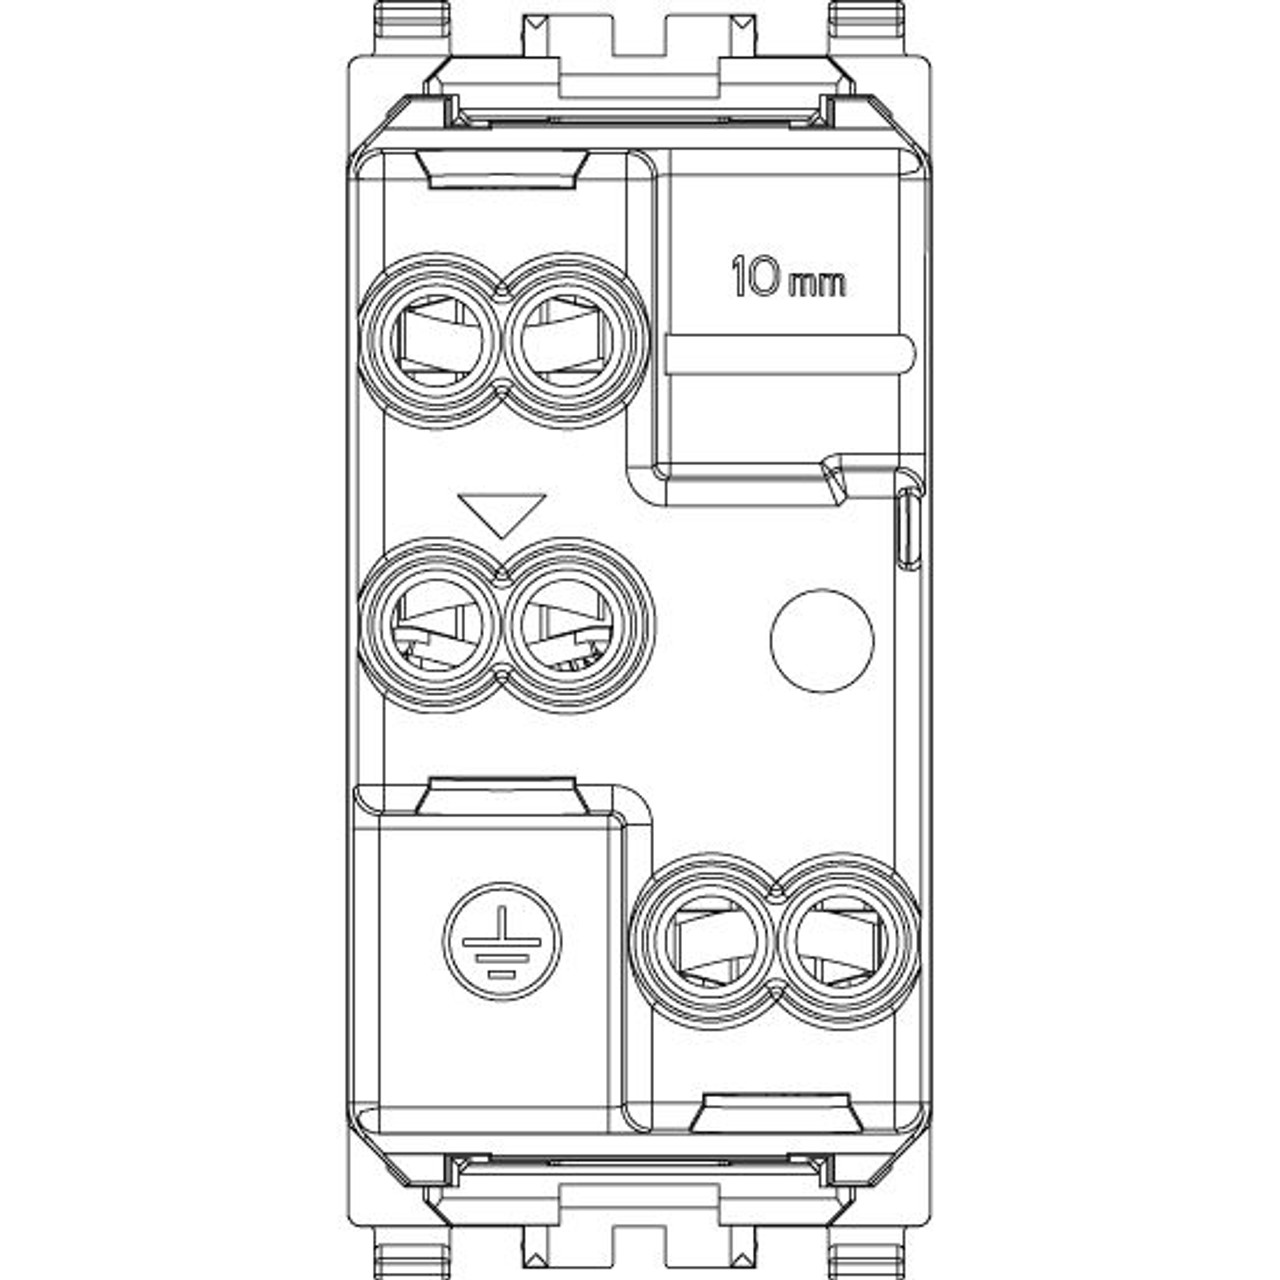 Vimar - Eikon 20201 P11 SICURY Socket Outlet - 2P+E 10 A 250 V, Italian Standard, Plastic - Apollo Lighting